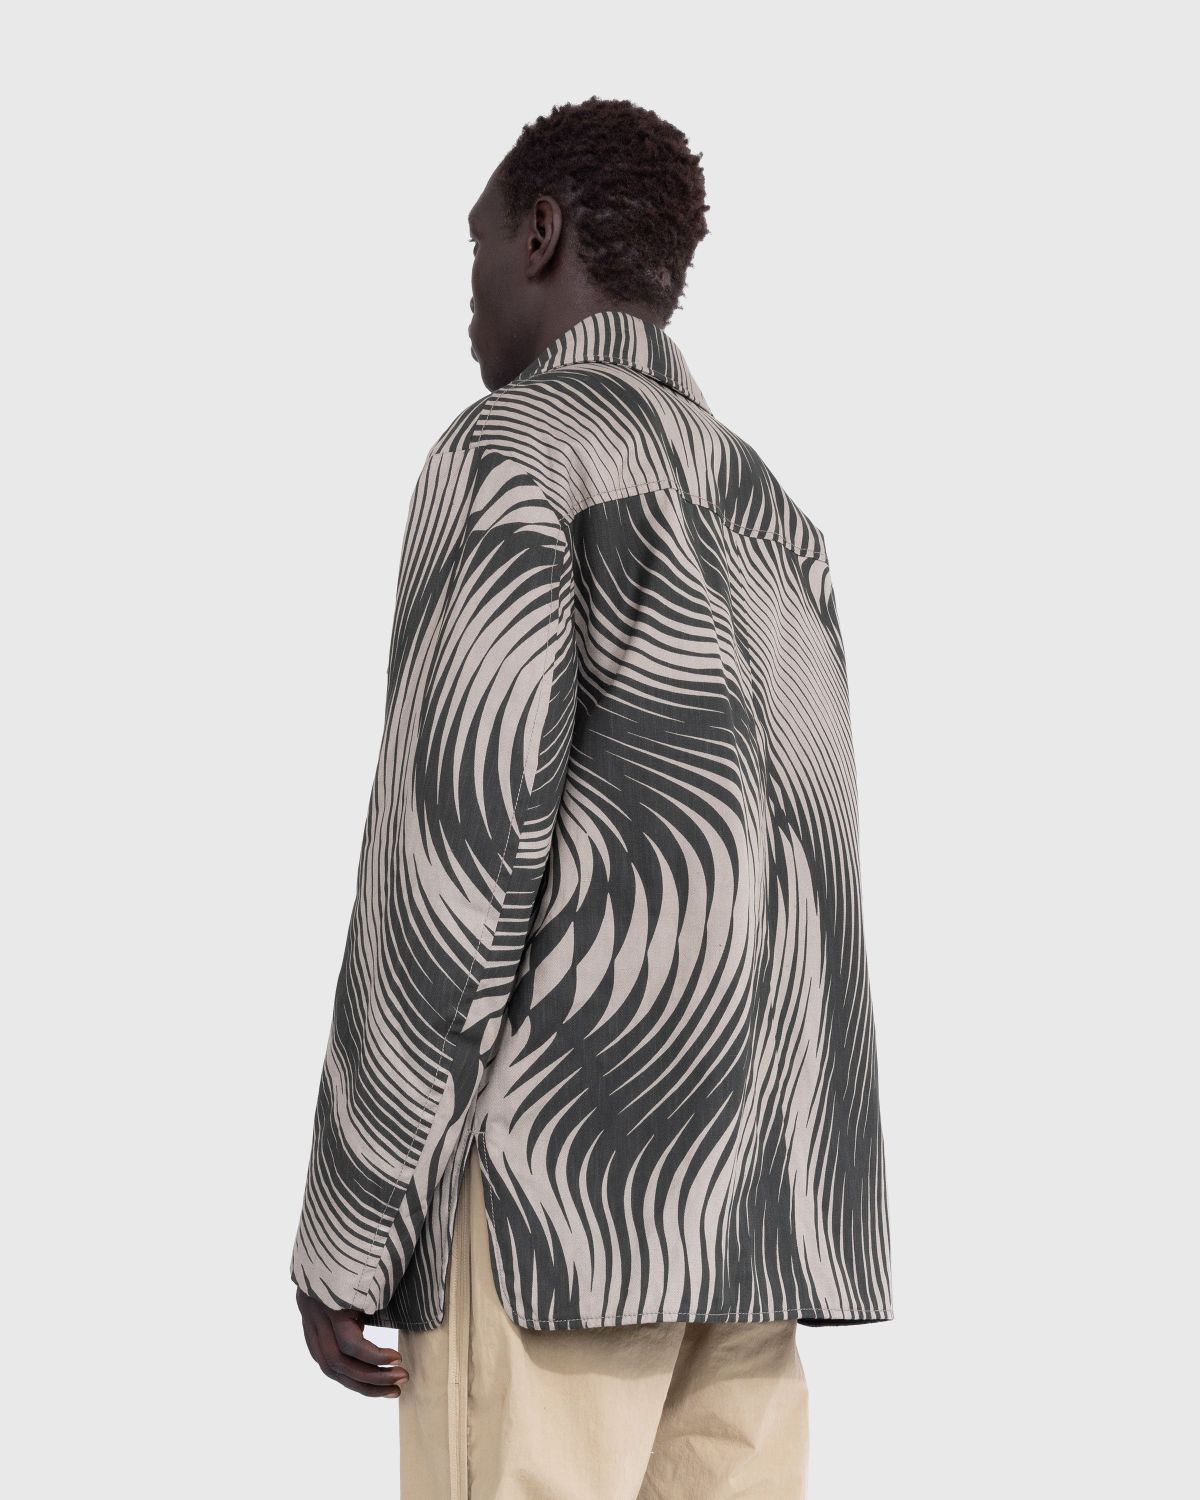 Dries van Noten – Valko Jacket Anthracite - Jackets - Grey - Image 5